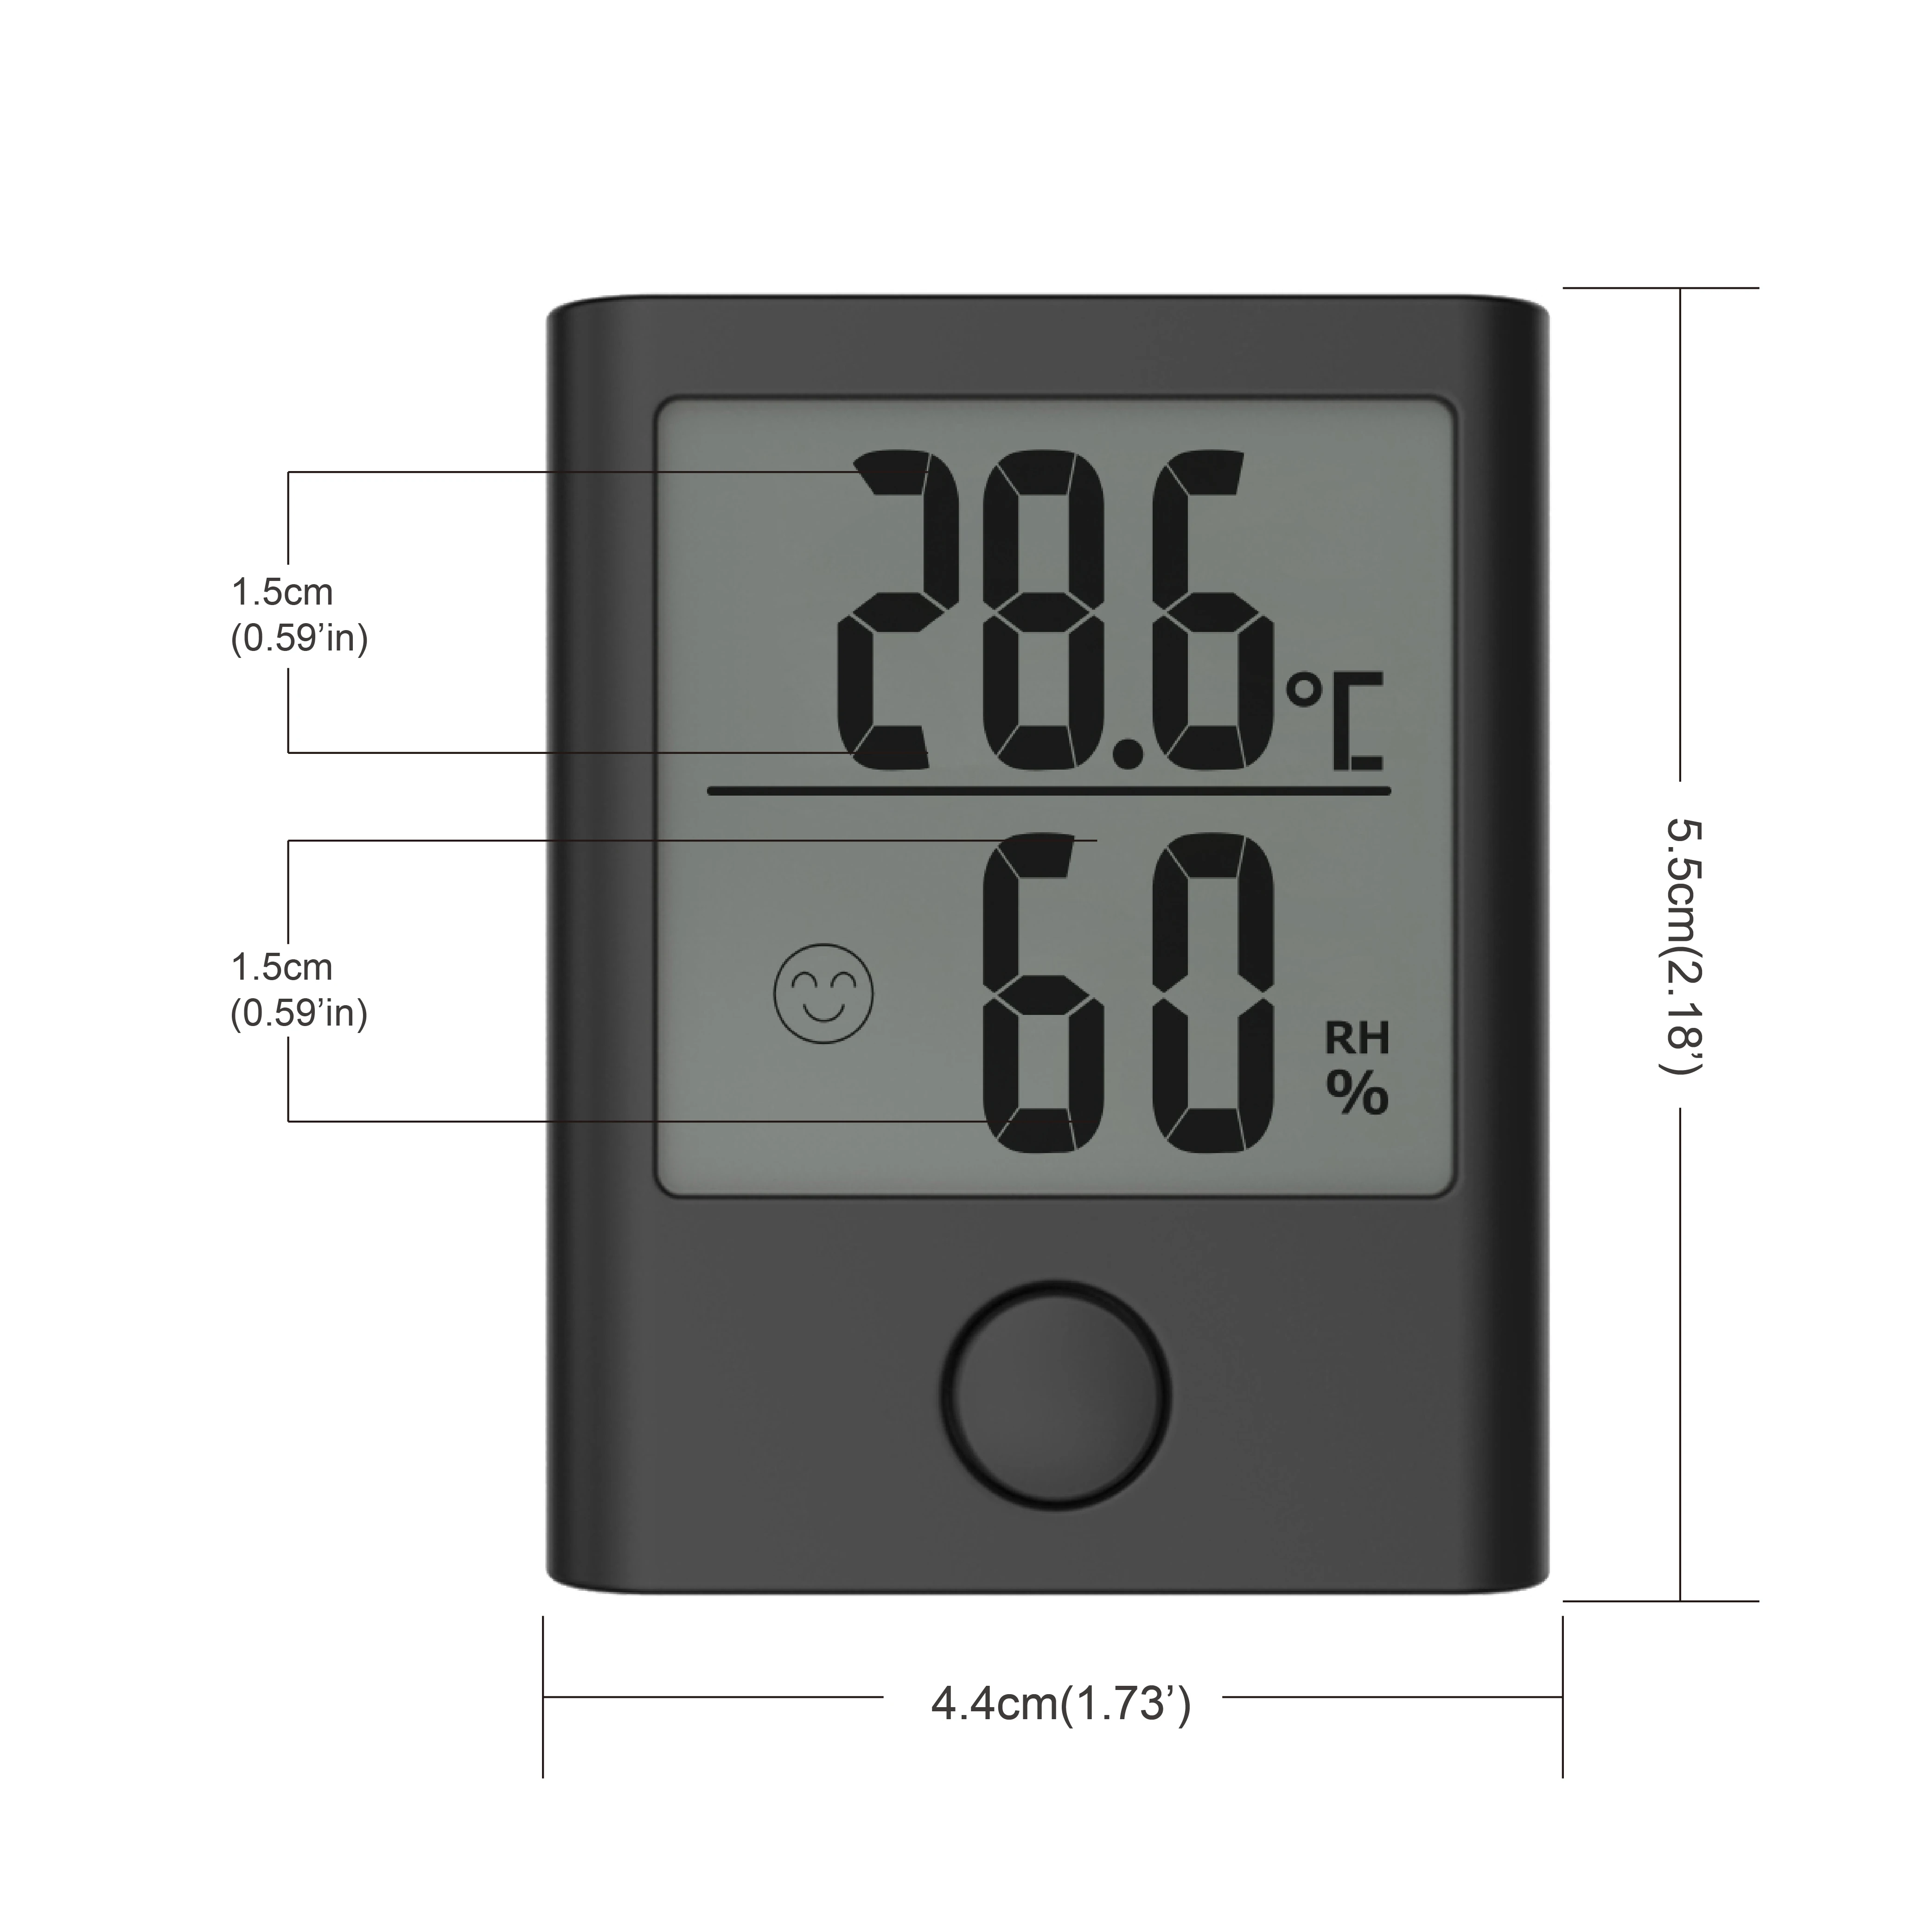 Mini Hygrometer Thermometer Digital LCD Temperature Humidity Monitor digital temperature indicator Indoor Home Humidity Meter